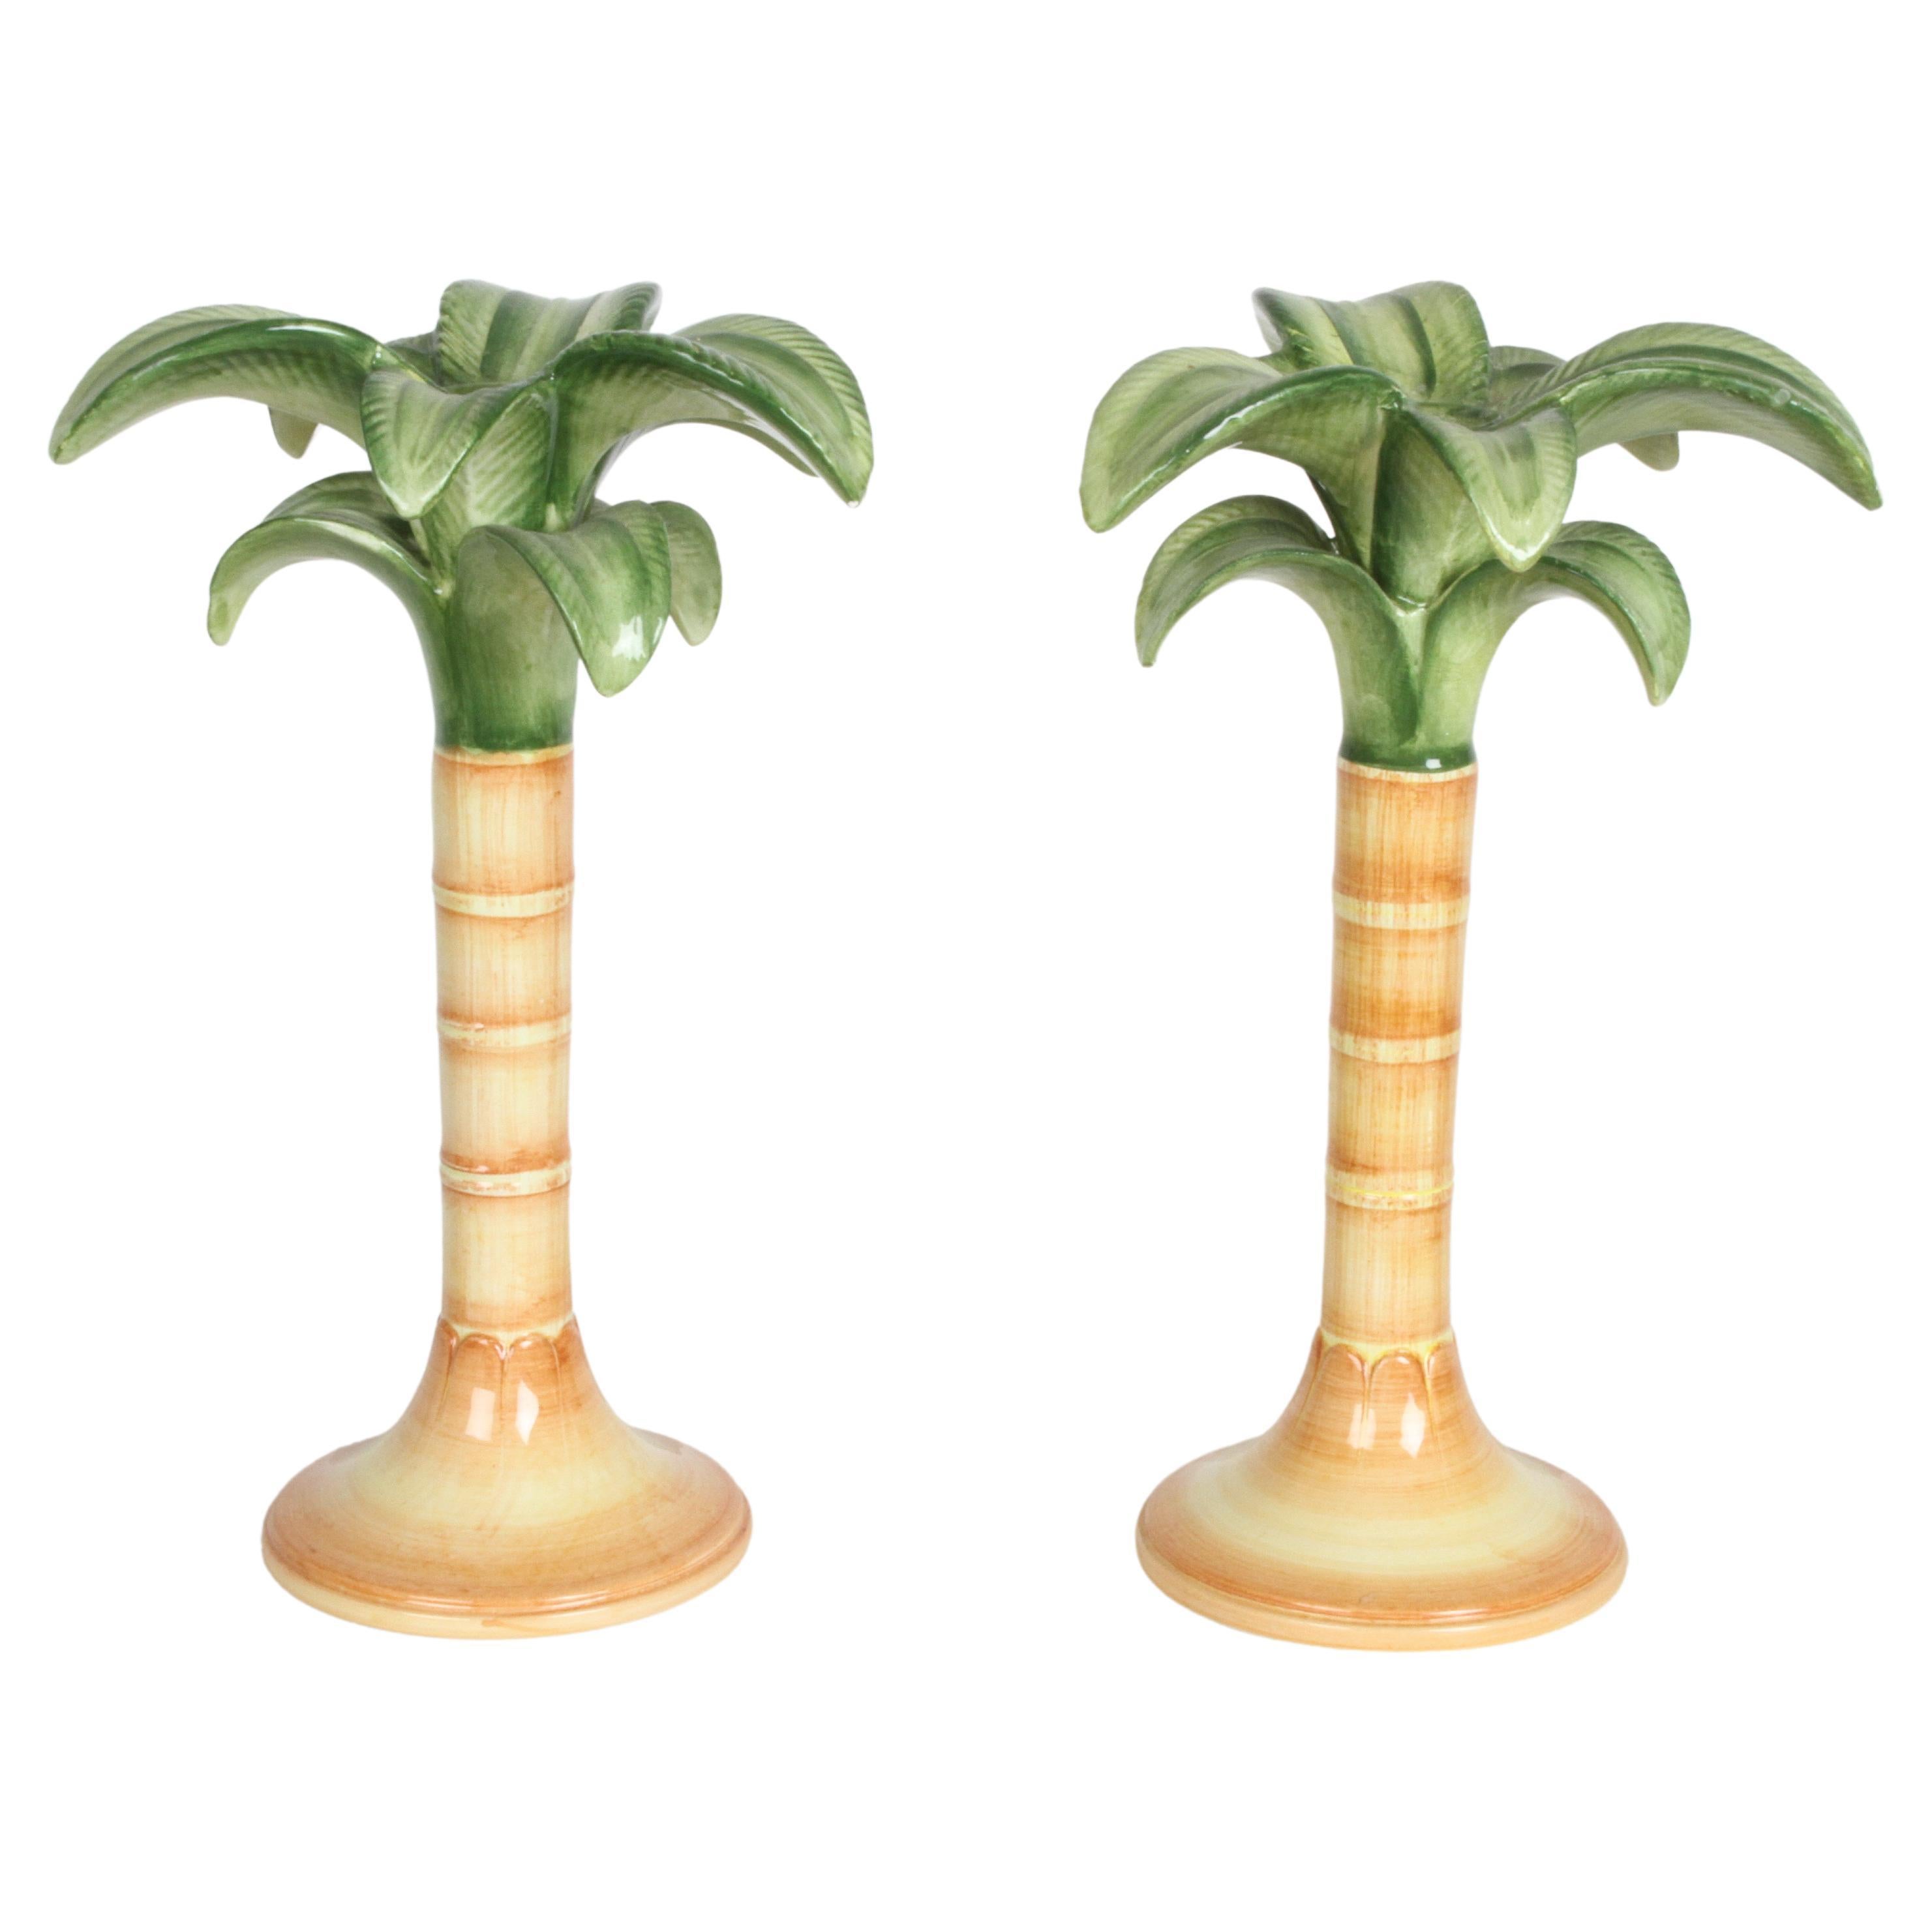 Pair of Vintage Hand Painted Ceramic Palm Tree Candlesticks by Vietri, Italy